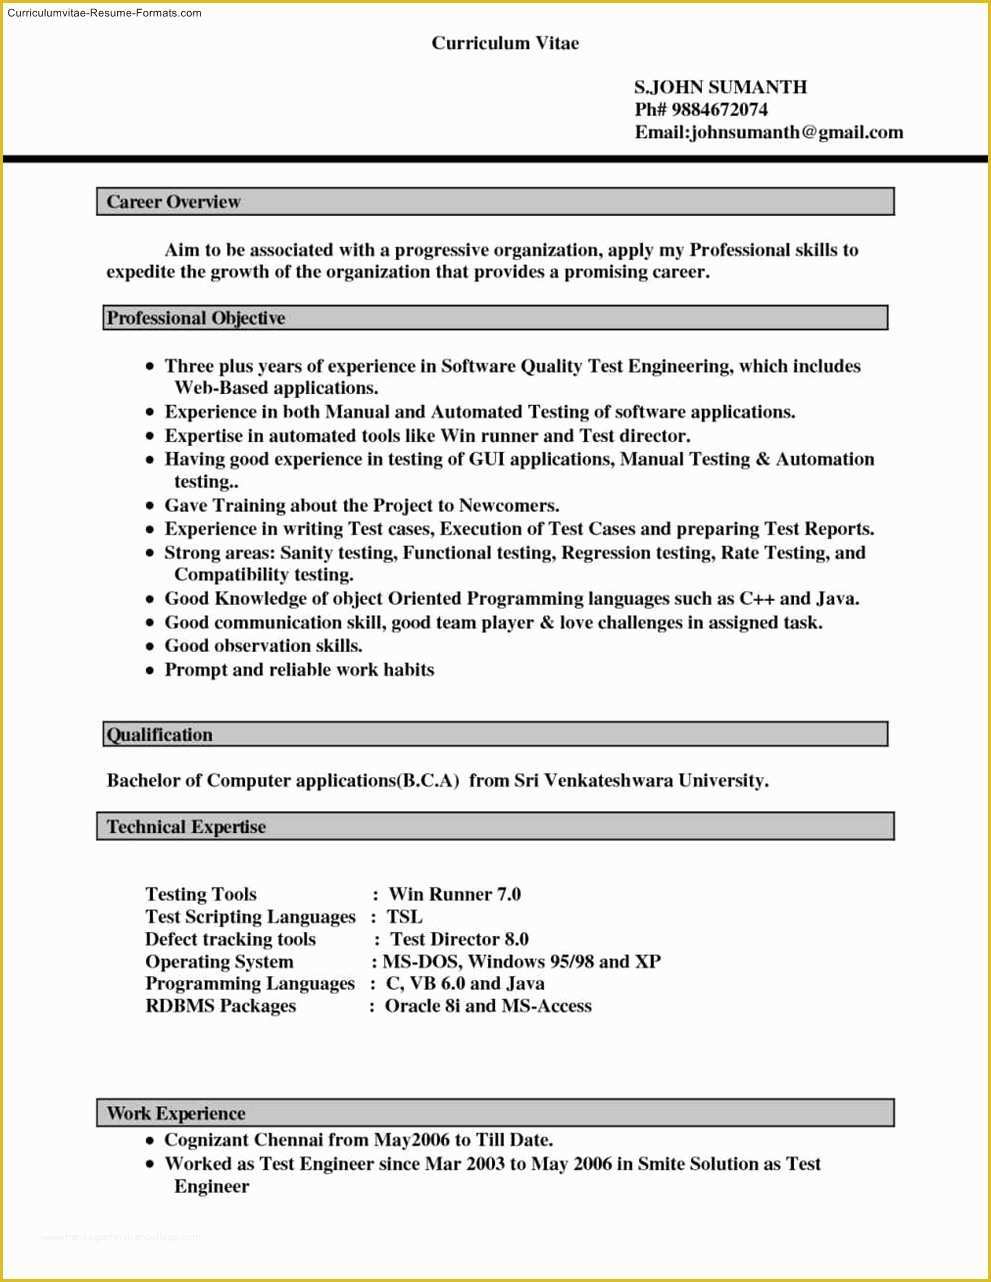 Microsoft Office 2007 Resume Templates Free Download Of Free Resume Templates for Microsoft Word 2007 Free